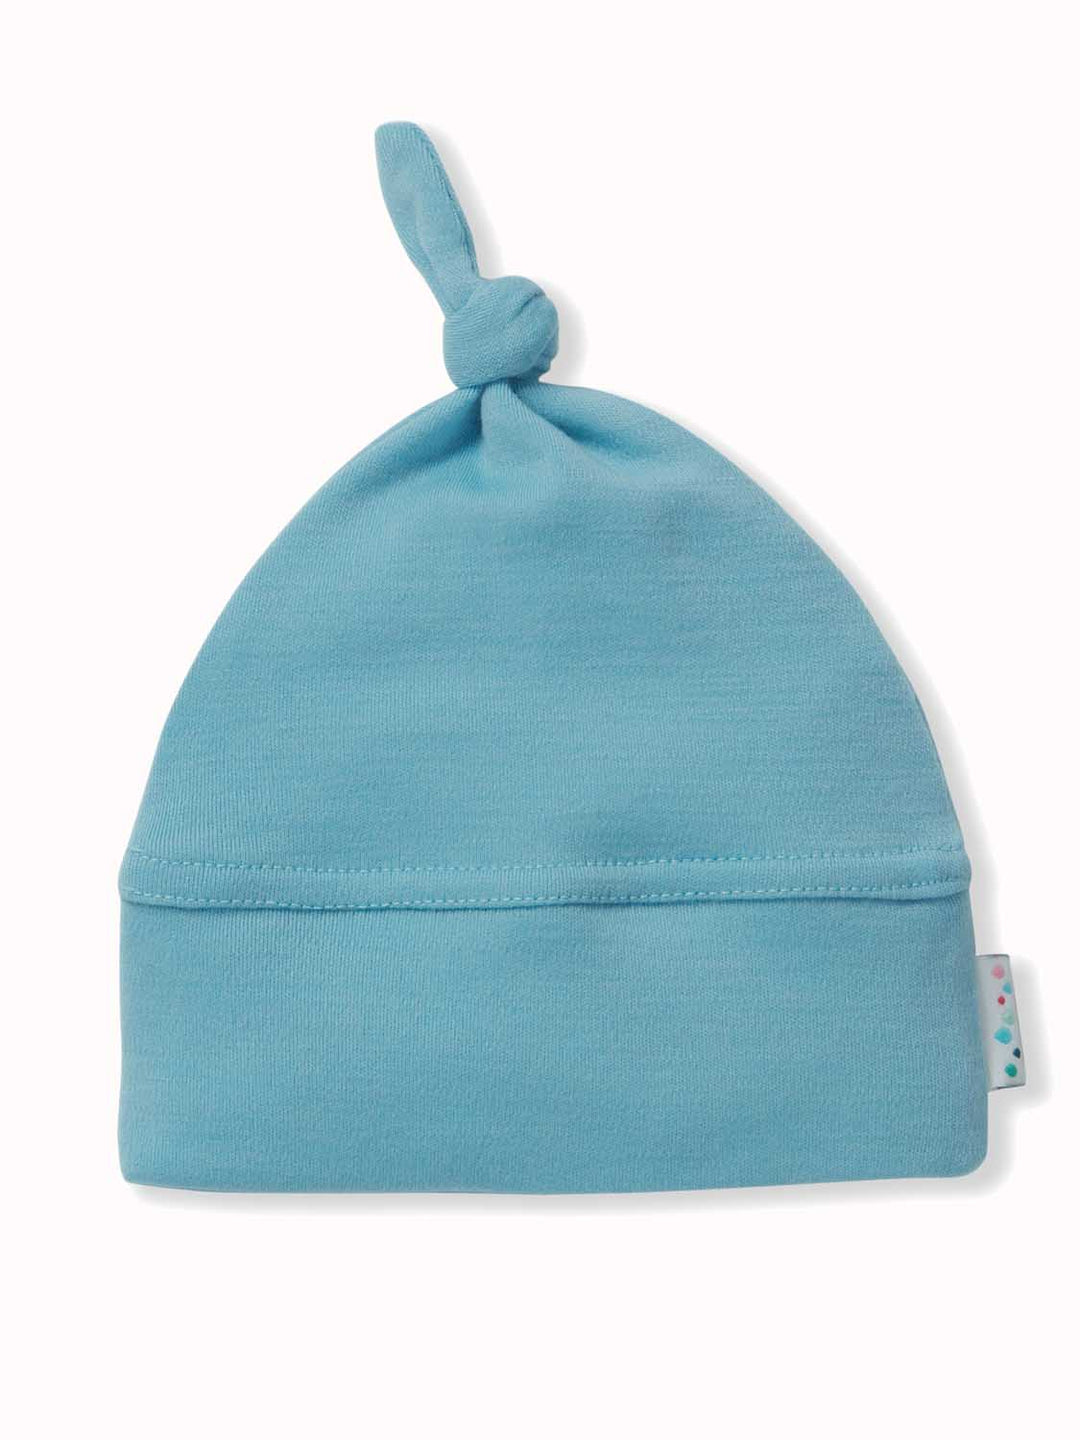 Merino baby hat blue #colour_raindrop